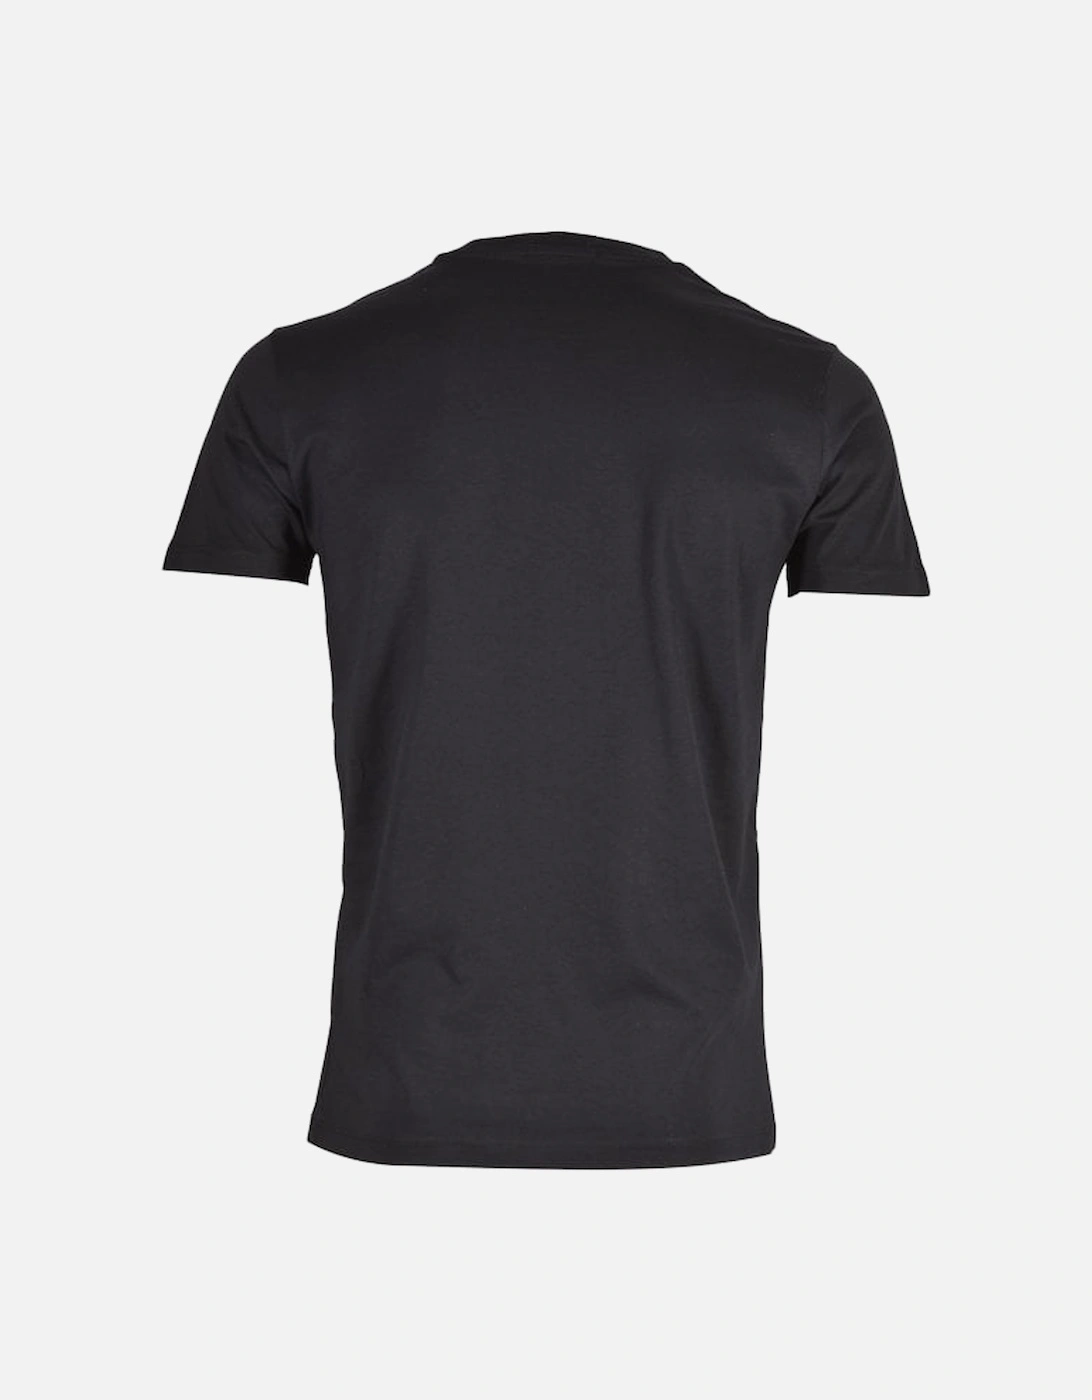 Logo Print T-Shirt, Black